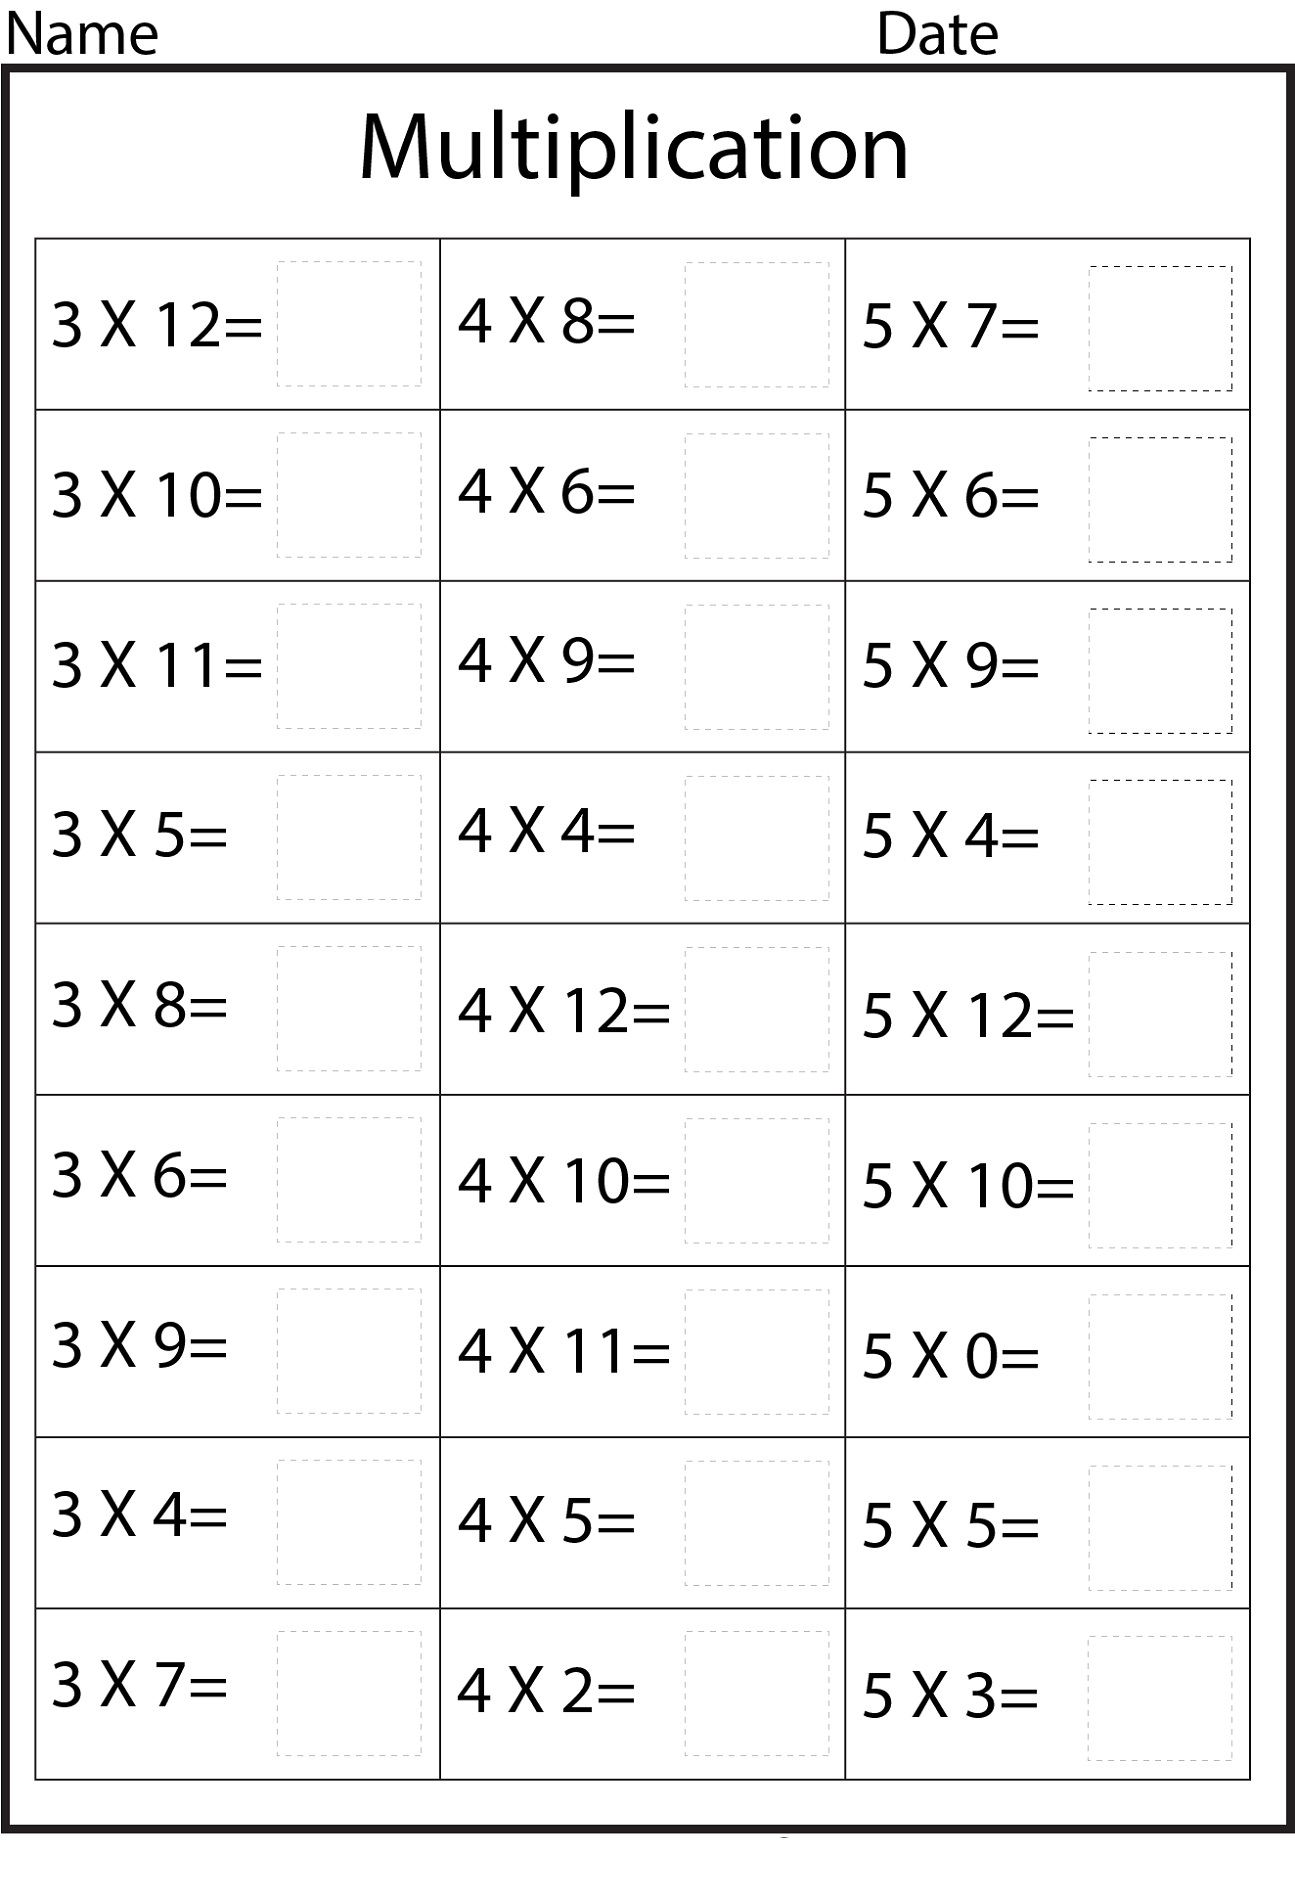 multiplication tables worksheets 7 12 printable